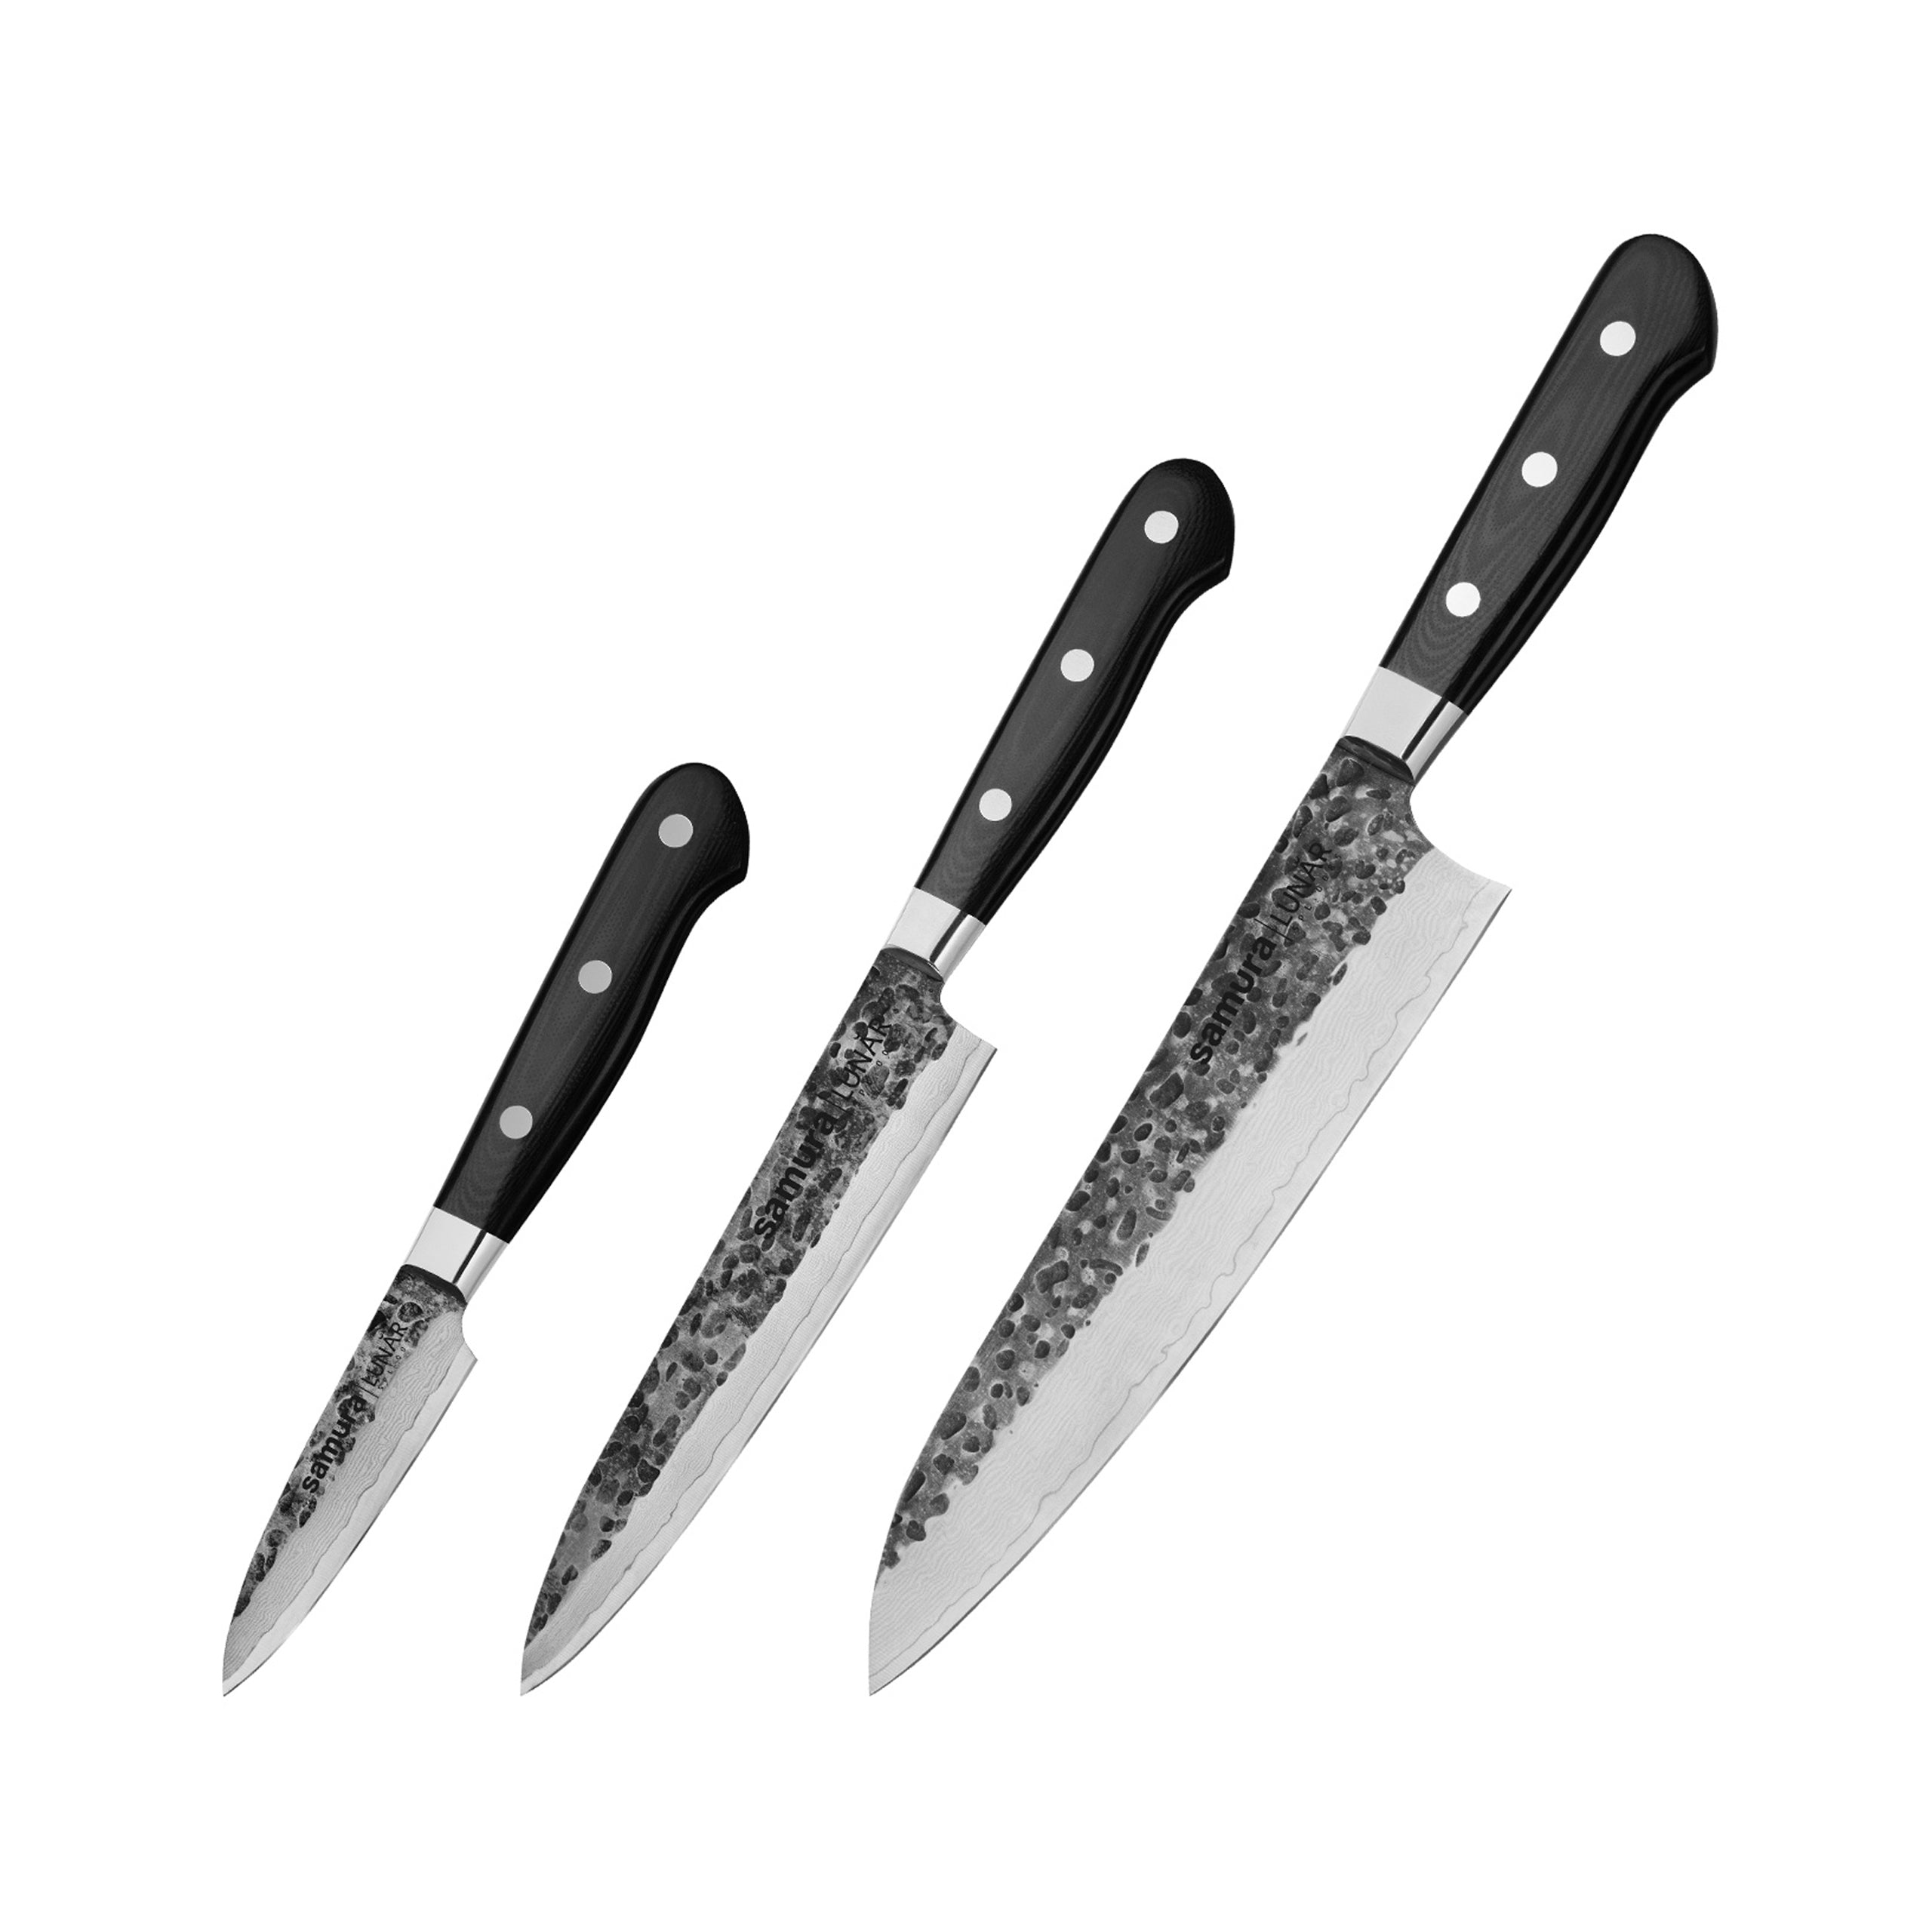 Samura PRO-S LUNAR (SPL-0230) "Set of 3 kitchen knives: Paring knife, Utility knife, Chef’s knife"